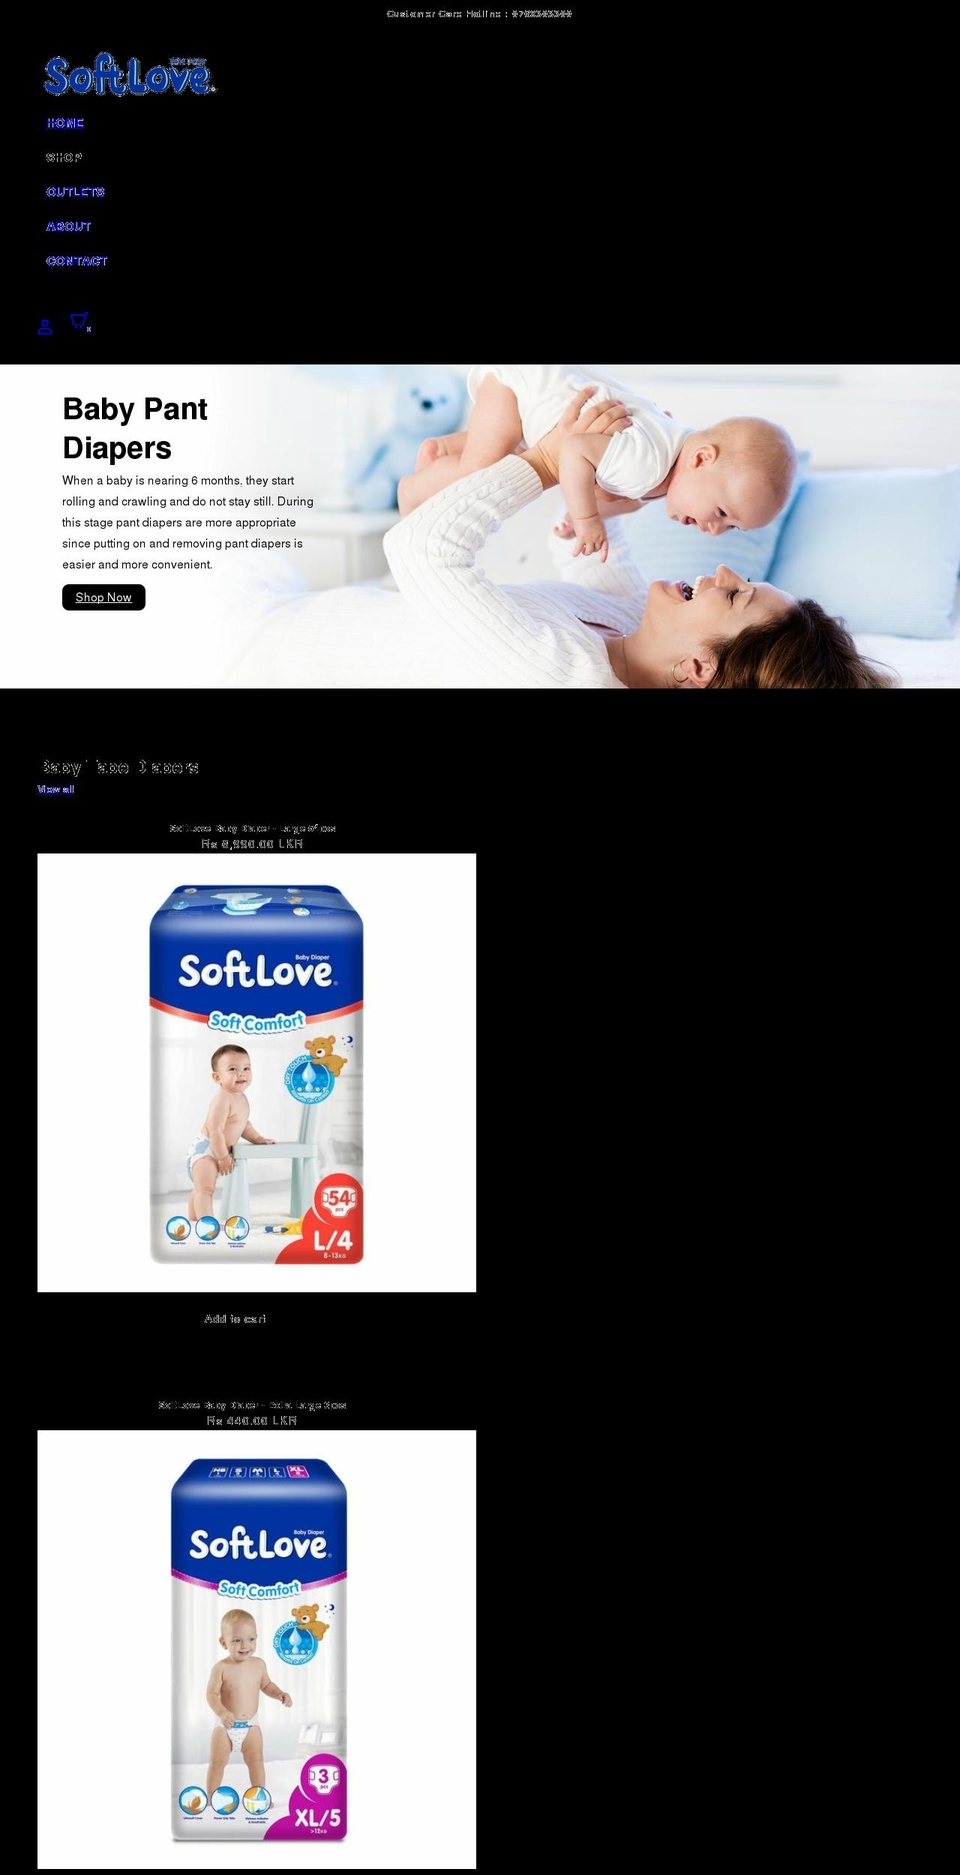 softlove.lk shopify website screenshot